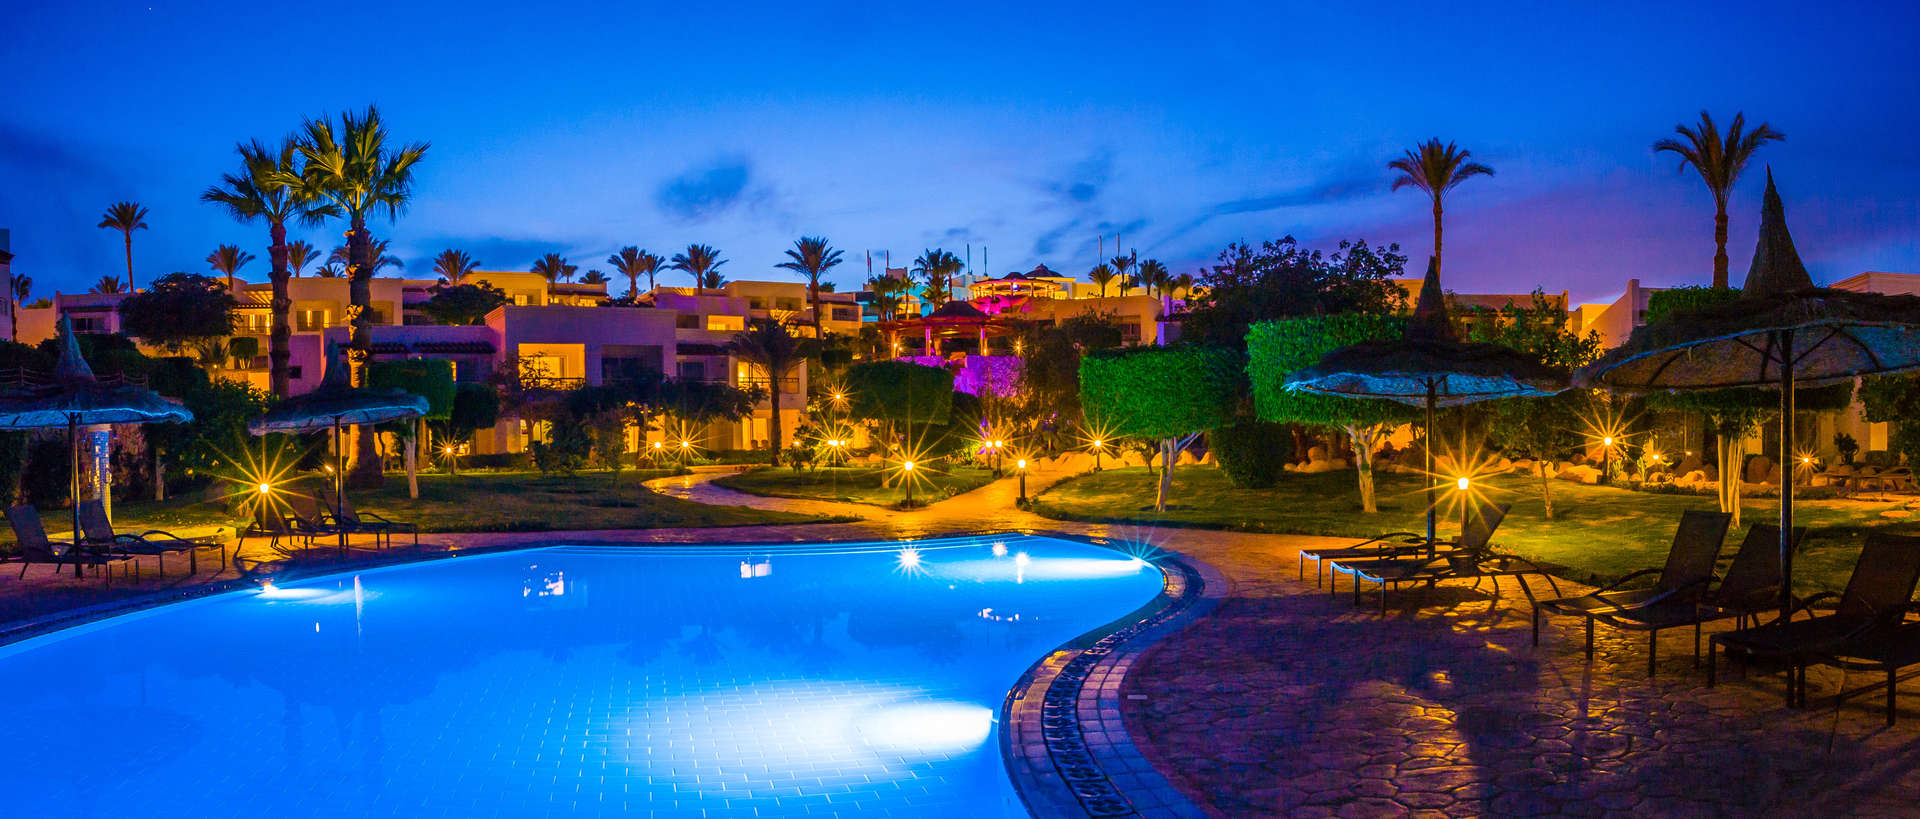 Le Renaissance Sharm El Sheikh Golden View Beach Resort